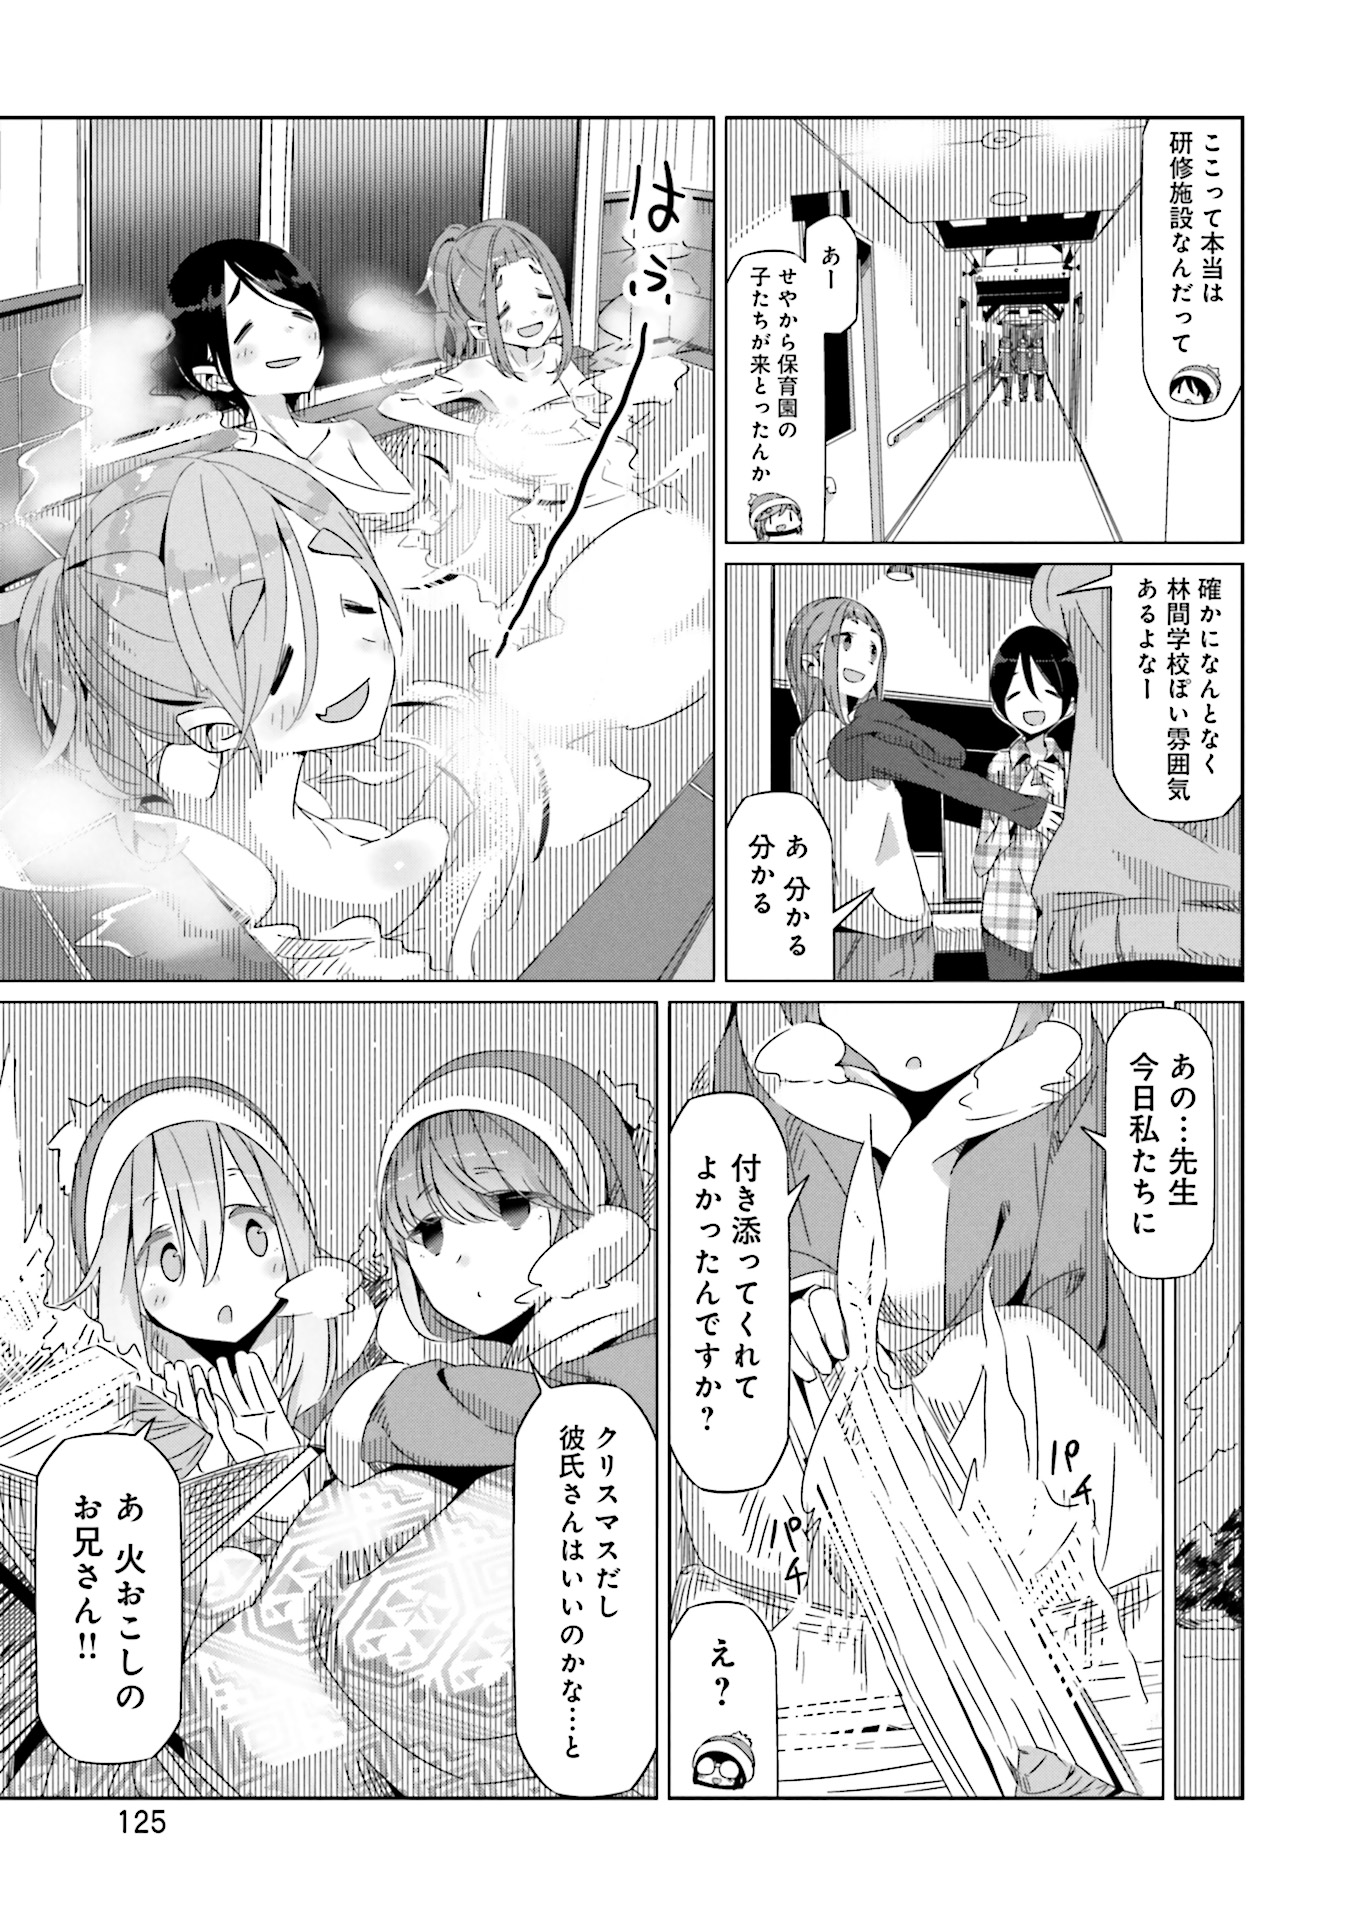 Yuru Camp - Chapter 23 - Page 3